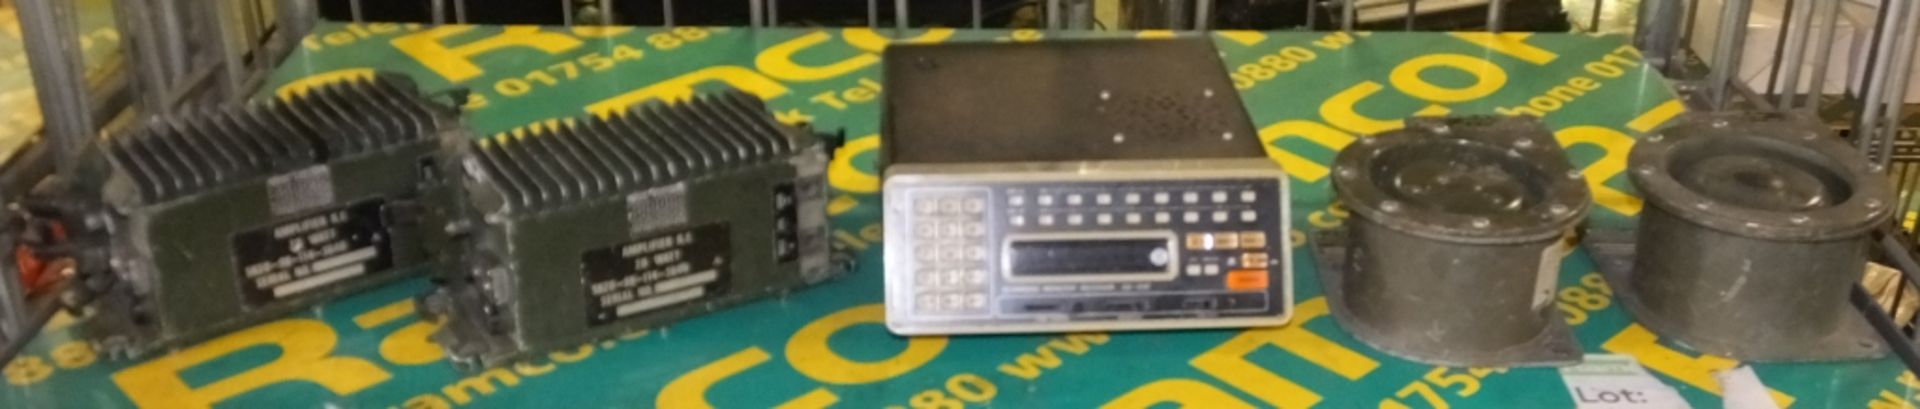 SX-200 Scanning Monitor Receiver, 2x CLansman 20Watt RF Amplifiers NSN 5820-99-114-3640, 2